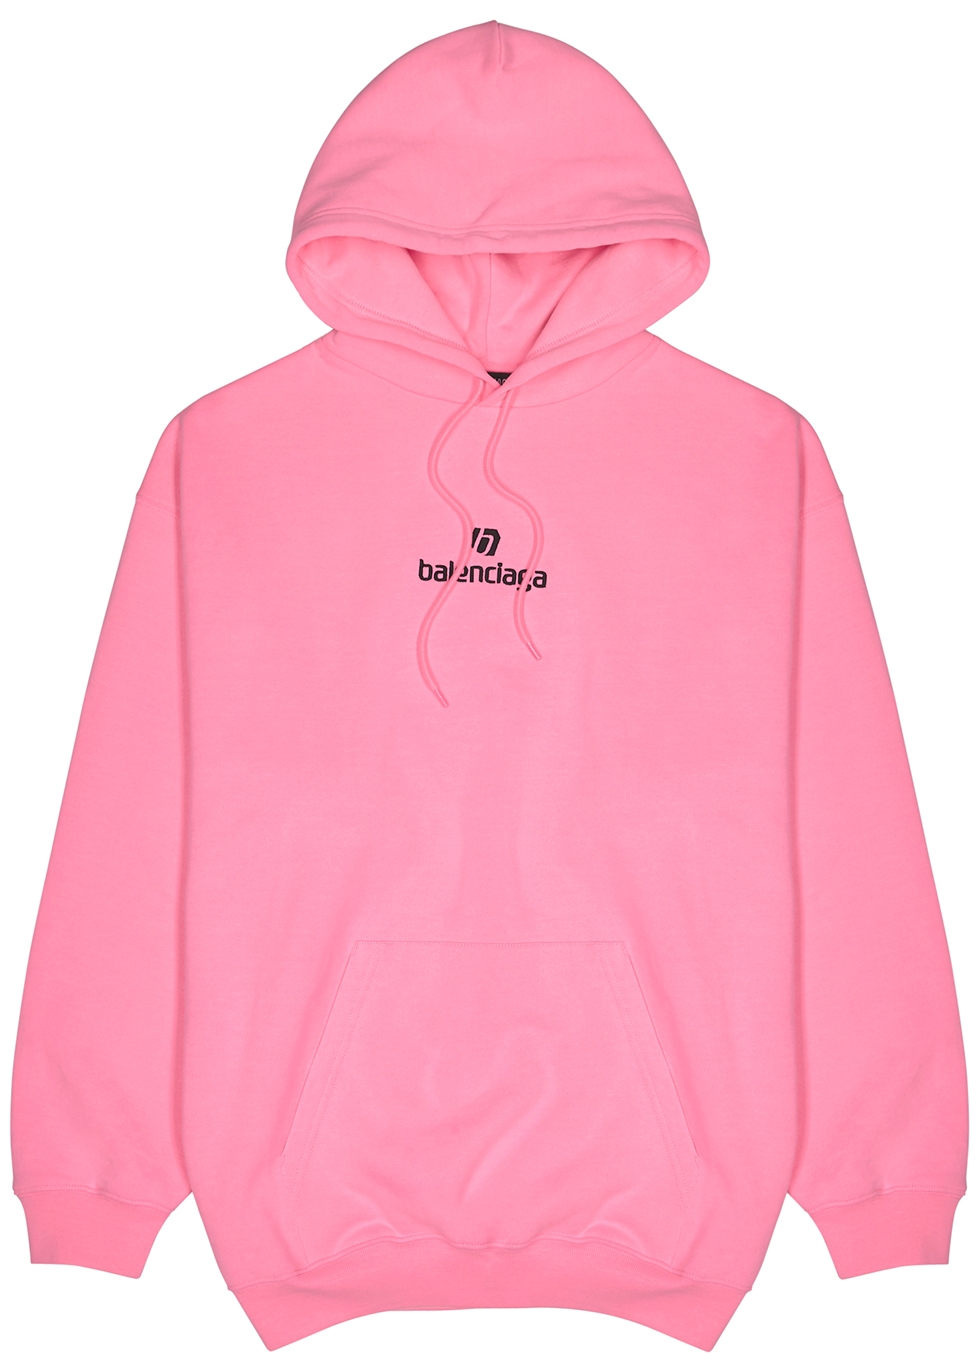 balenciaga sweatsuit mens pink